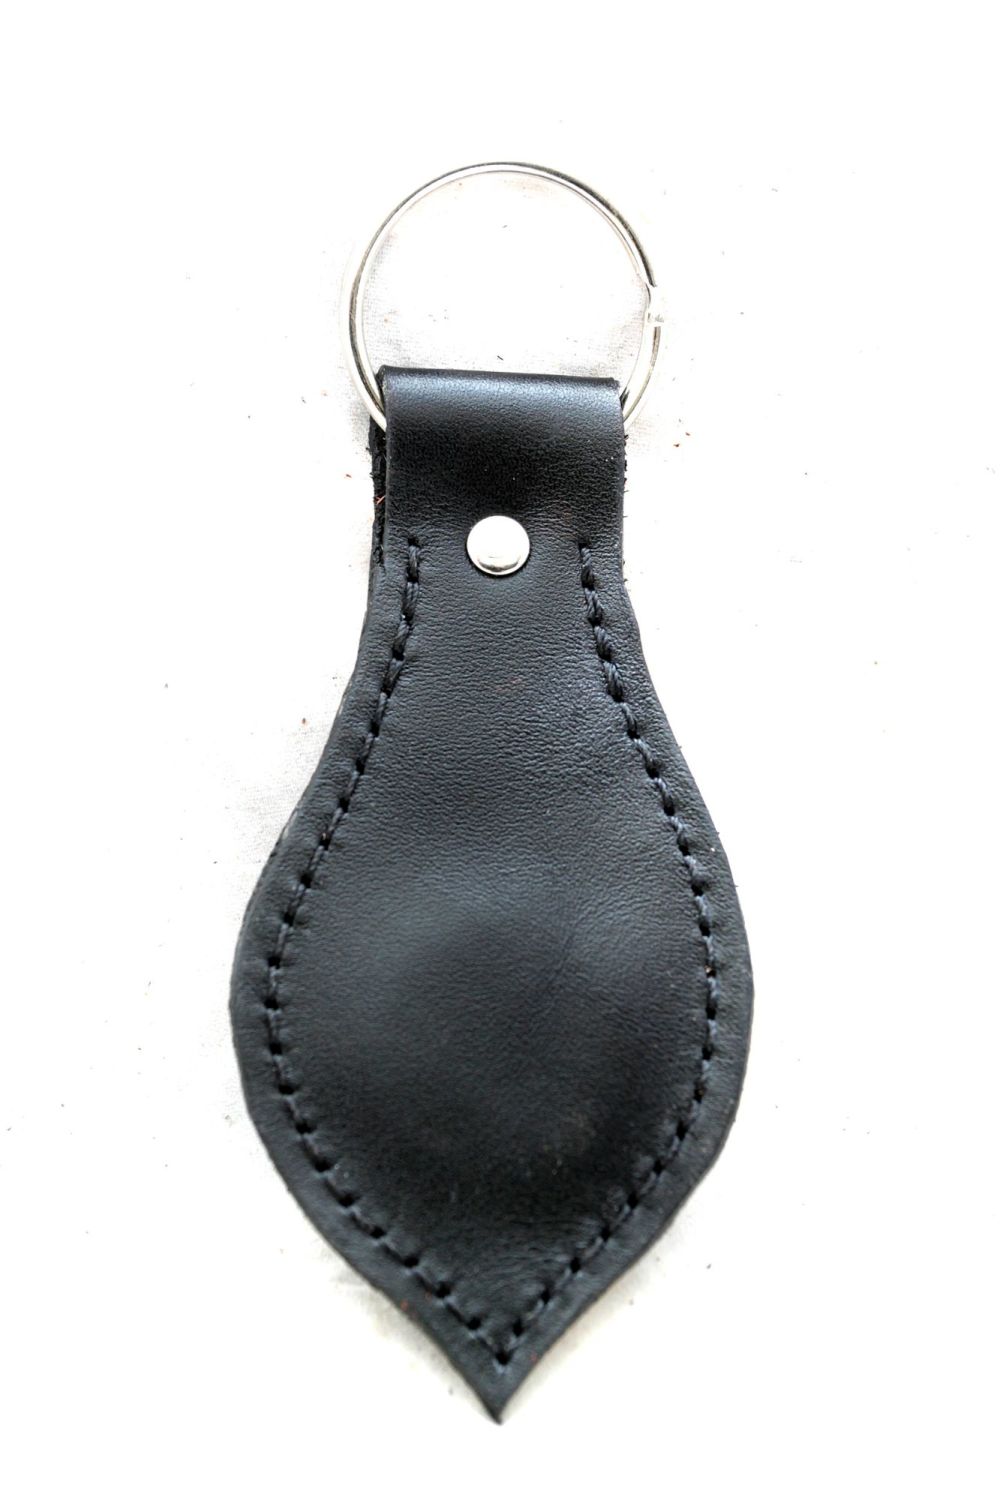 Polo Gaucho Leather Key ring Argentina Handmade Premium Quality 25mm wide UK  | eBay